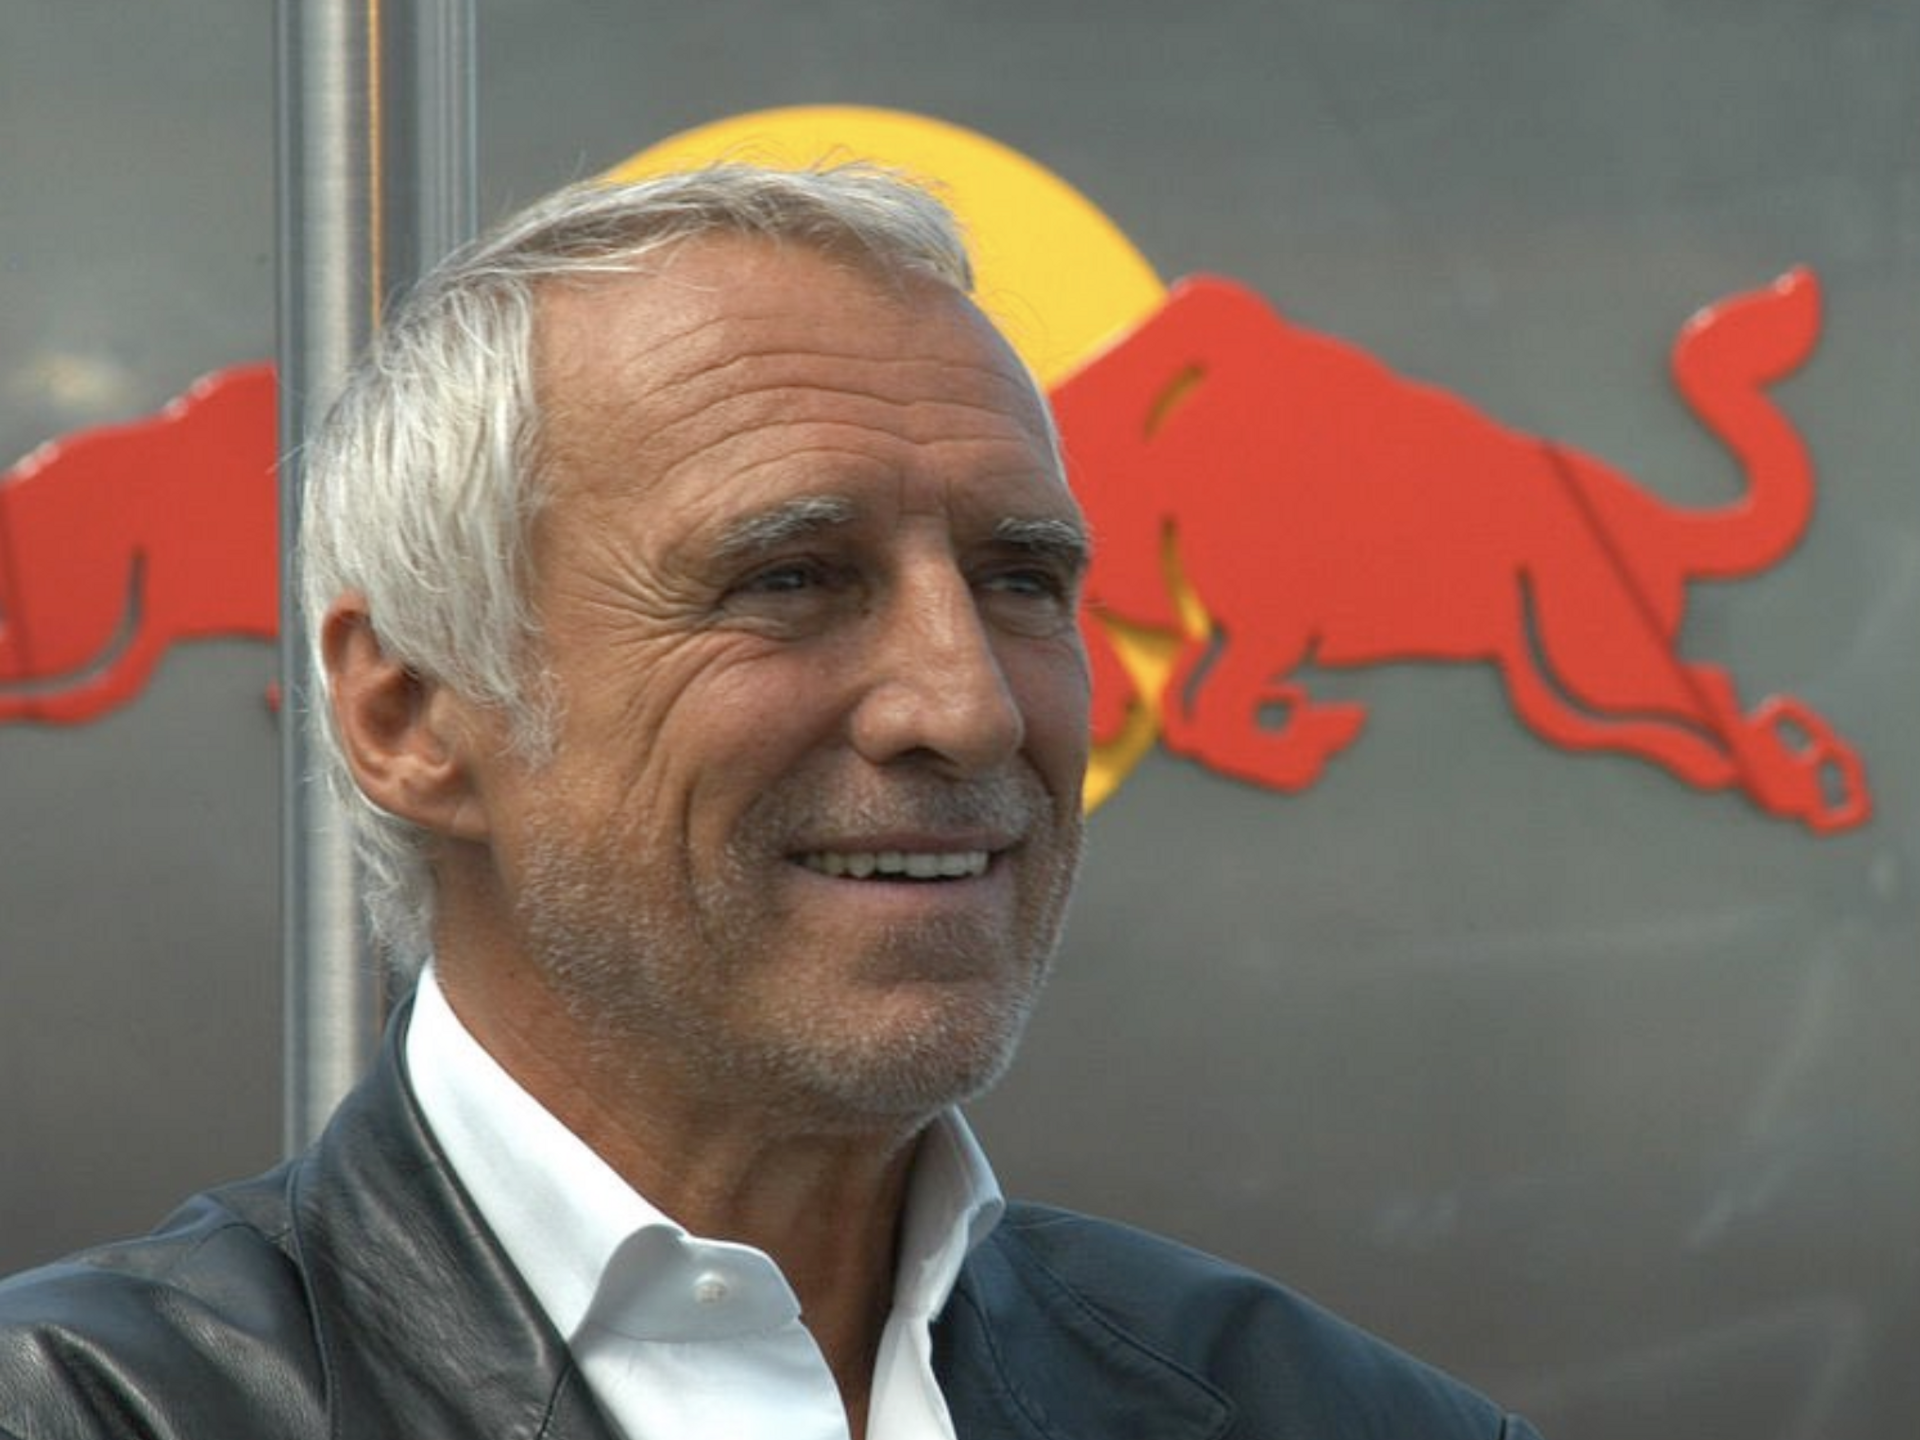 Red Bull owner Dietrich Mateschitz dies, company says